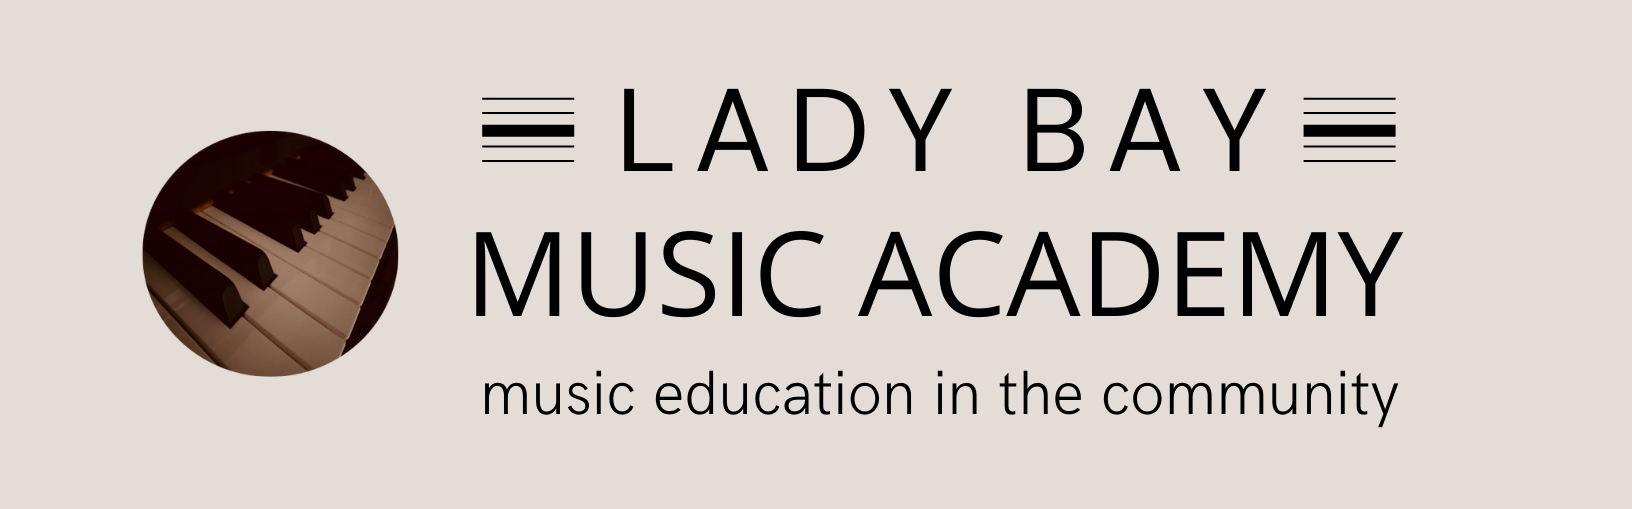 Lady Bay Music Academy